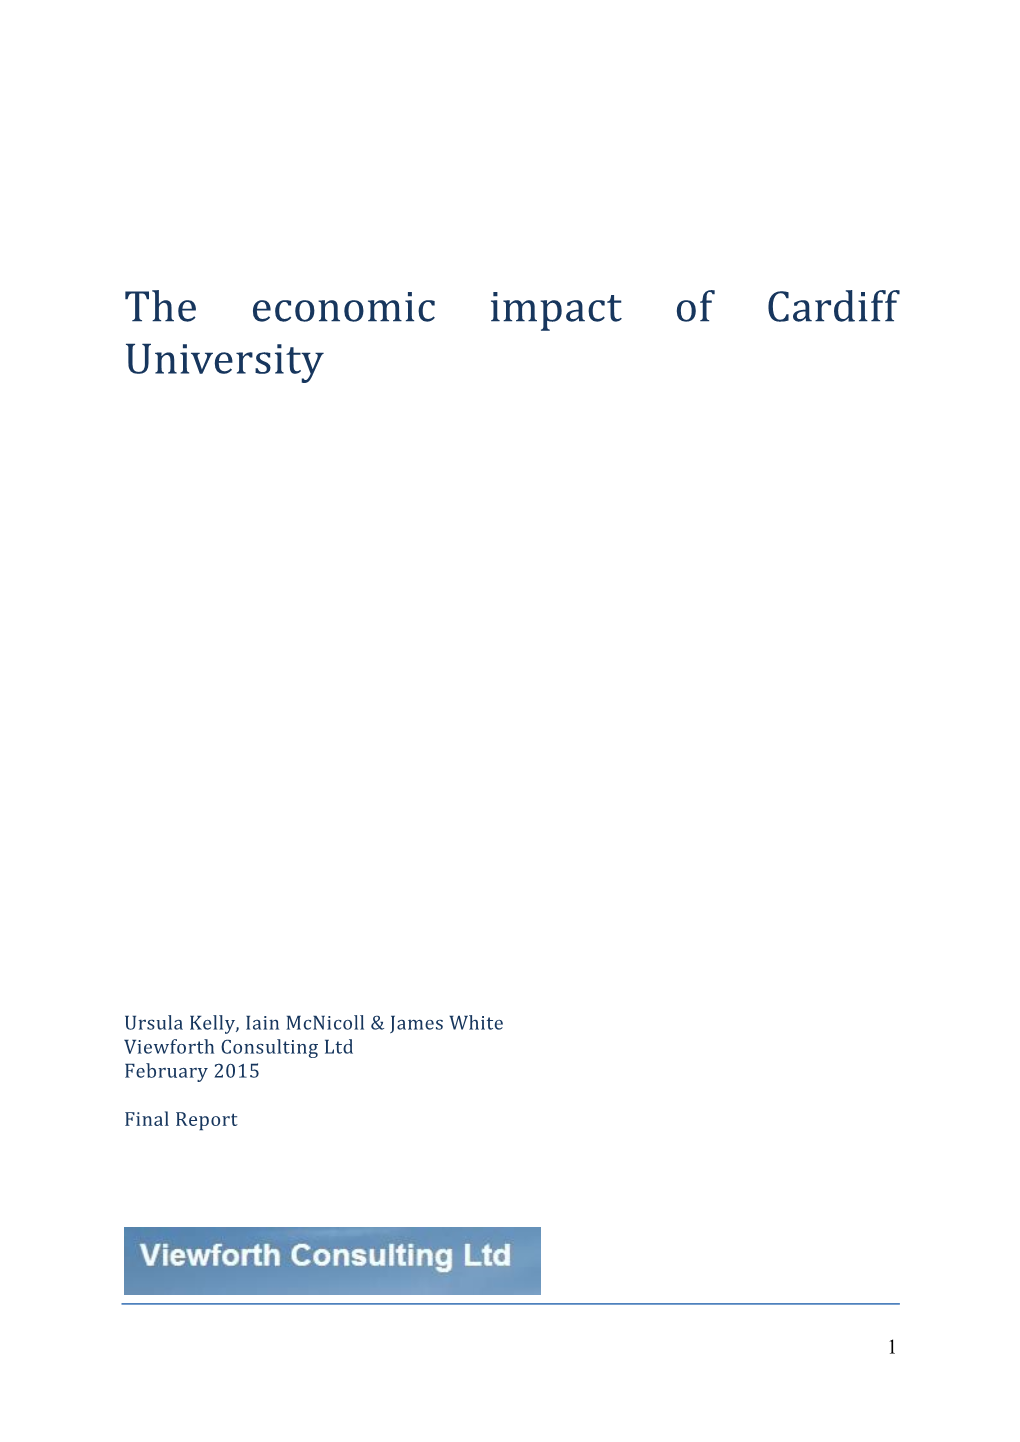 The Economic Impact of Cardiff University